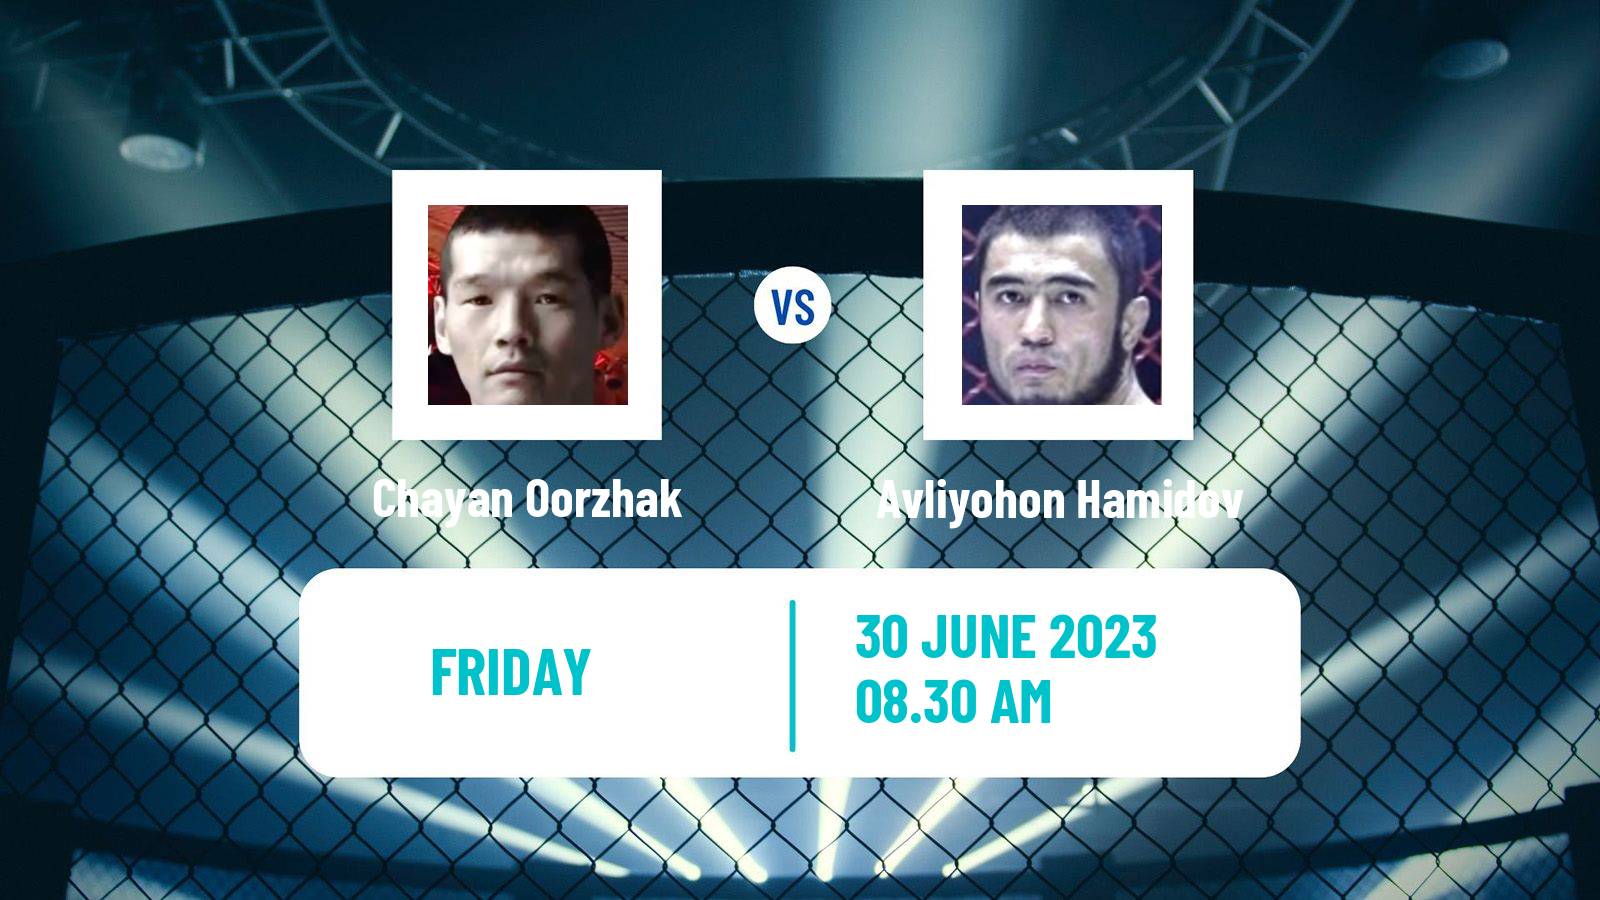 MMA Bantamweight One Championship Men Chayan Oorzhak - Avliyohon Hamidov